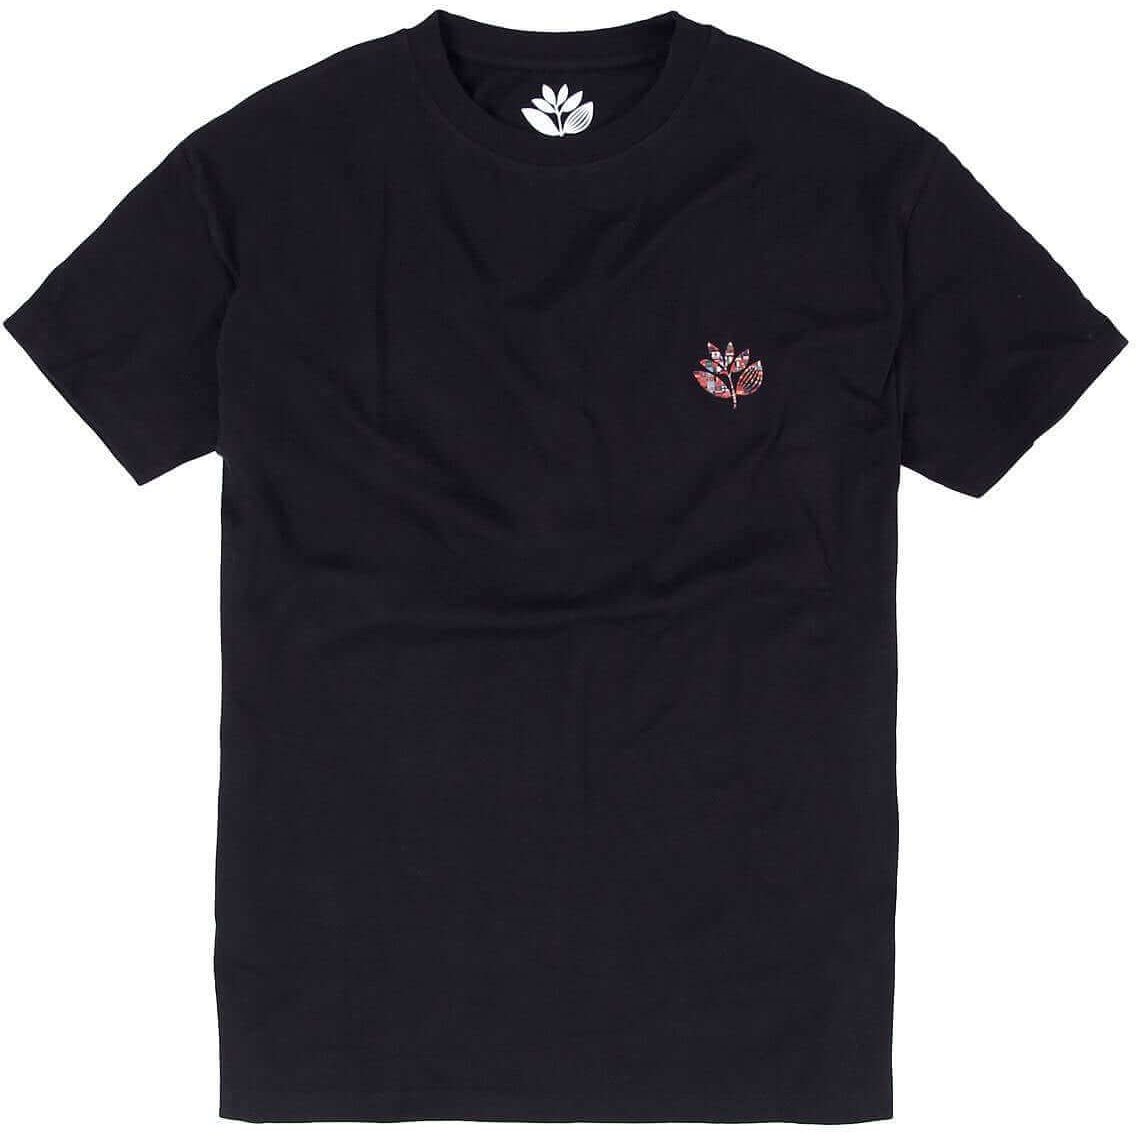 Magenta Plant Flag T-Shirt Black